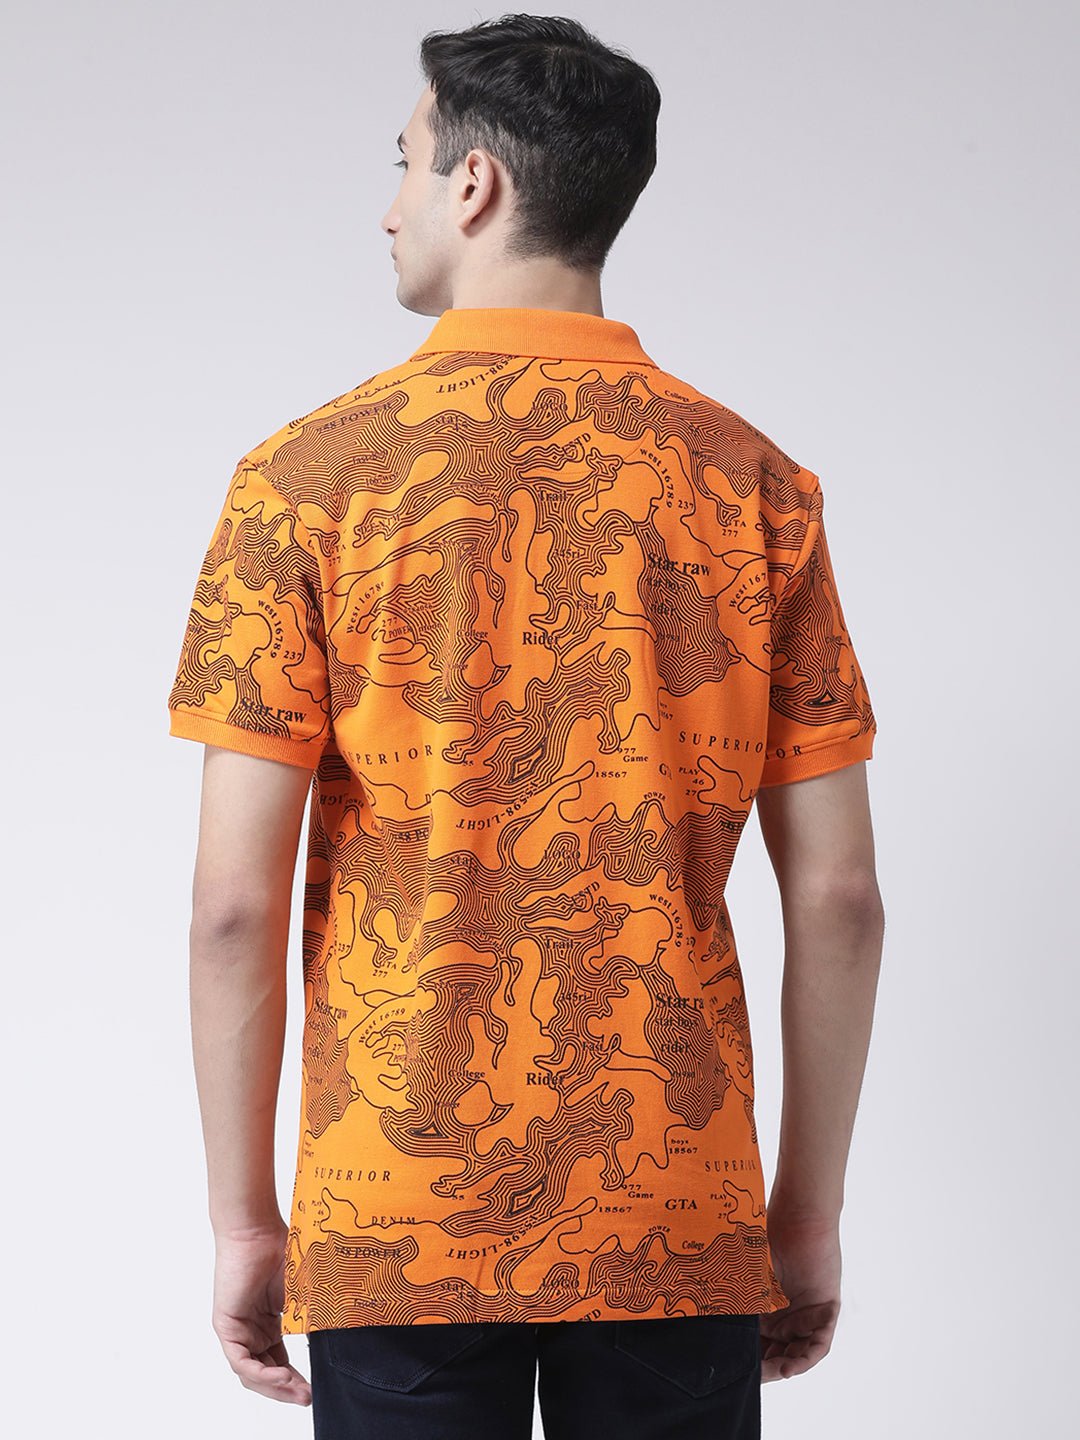 Orange Polo T-shirt - clubyork